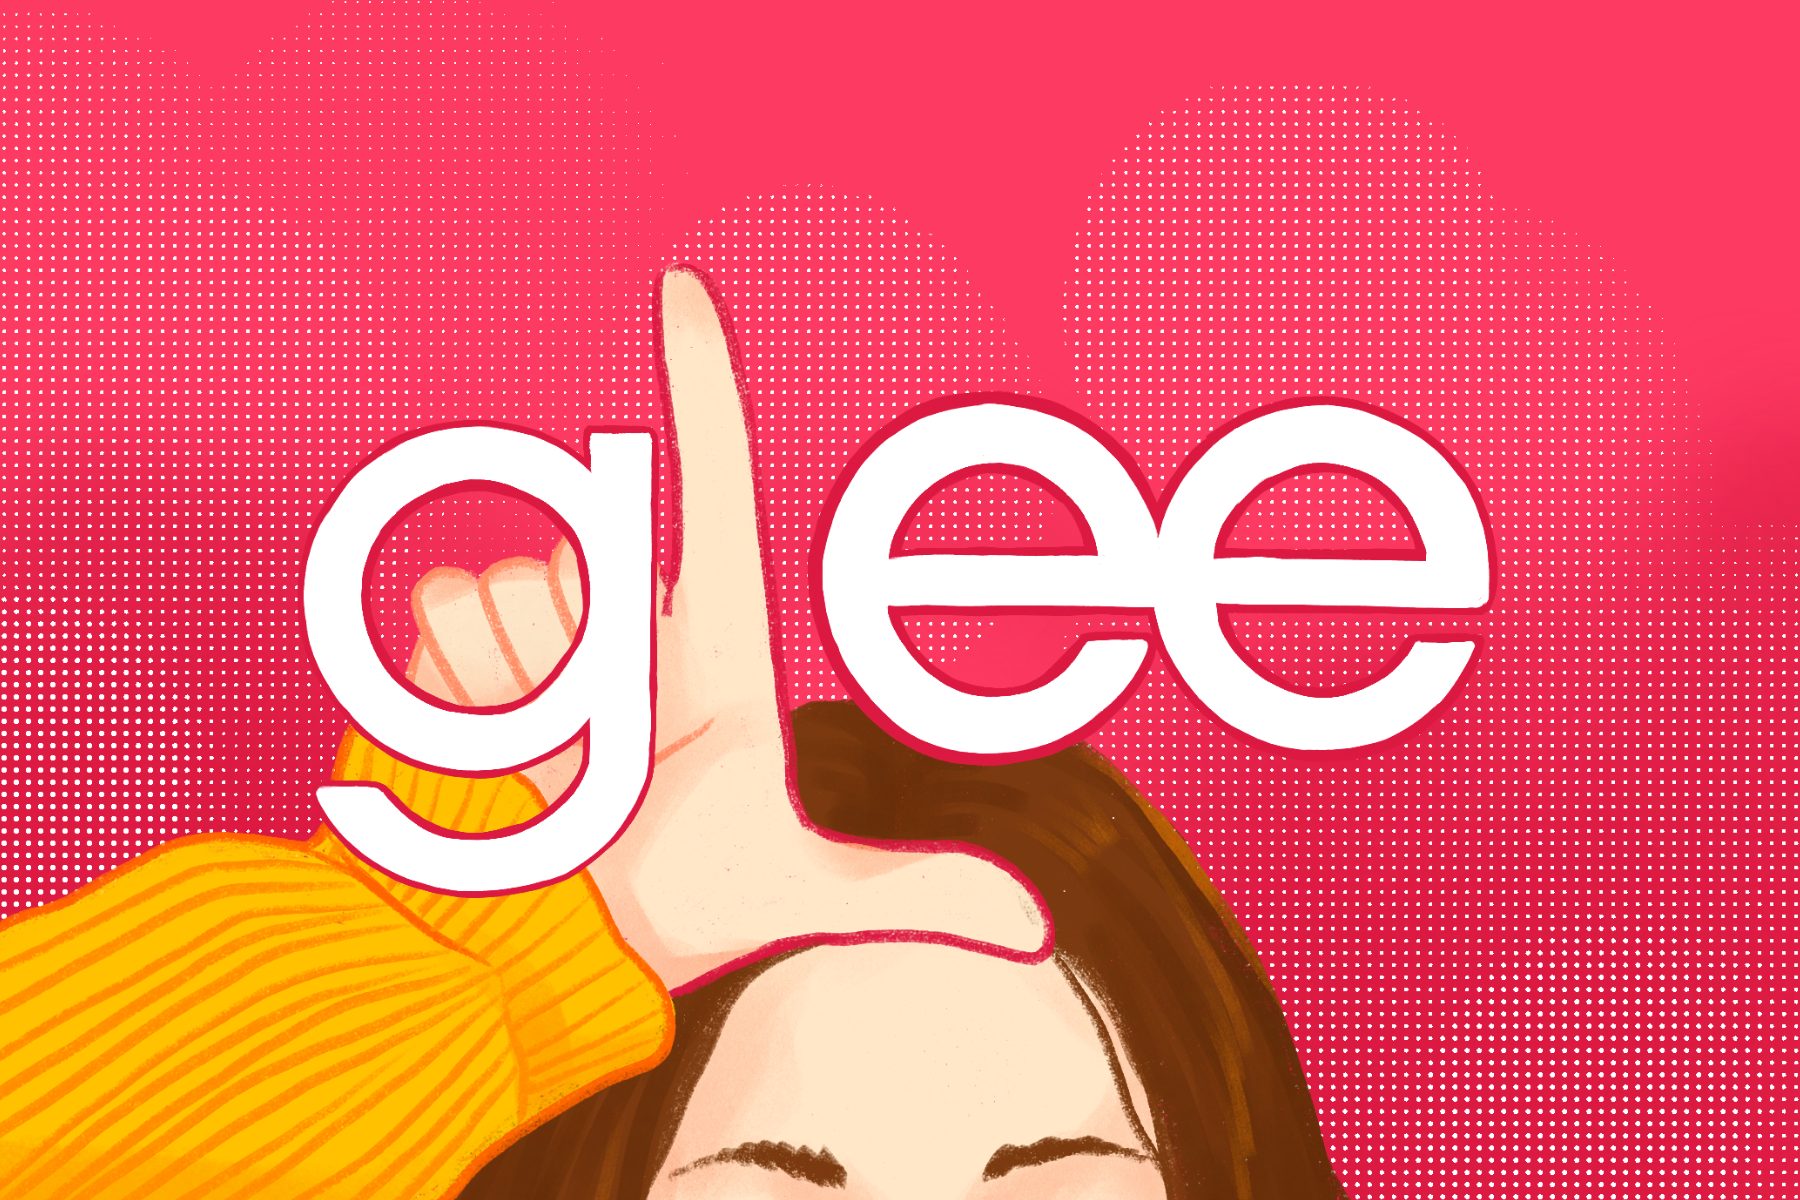 Glee. (Illustration by Eri Iguchi, Minneapolis College of Art and Design)